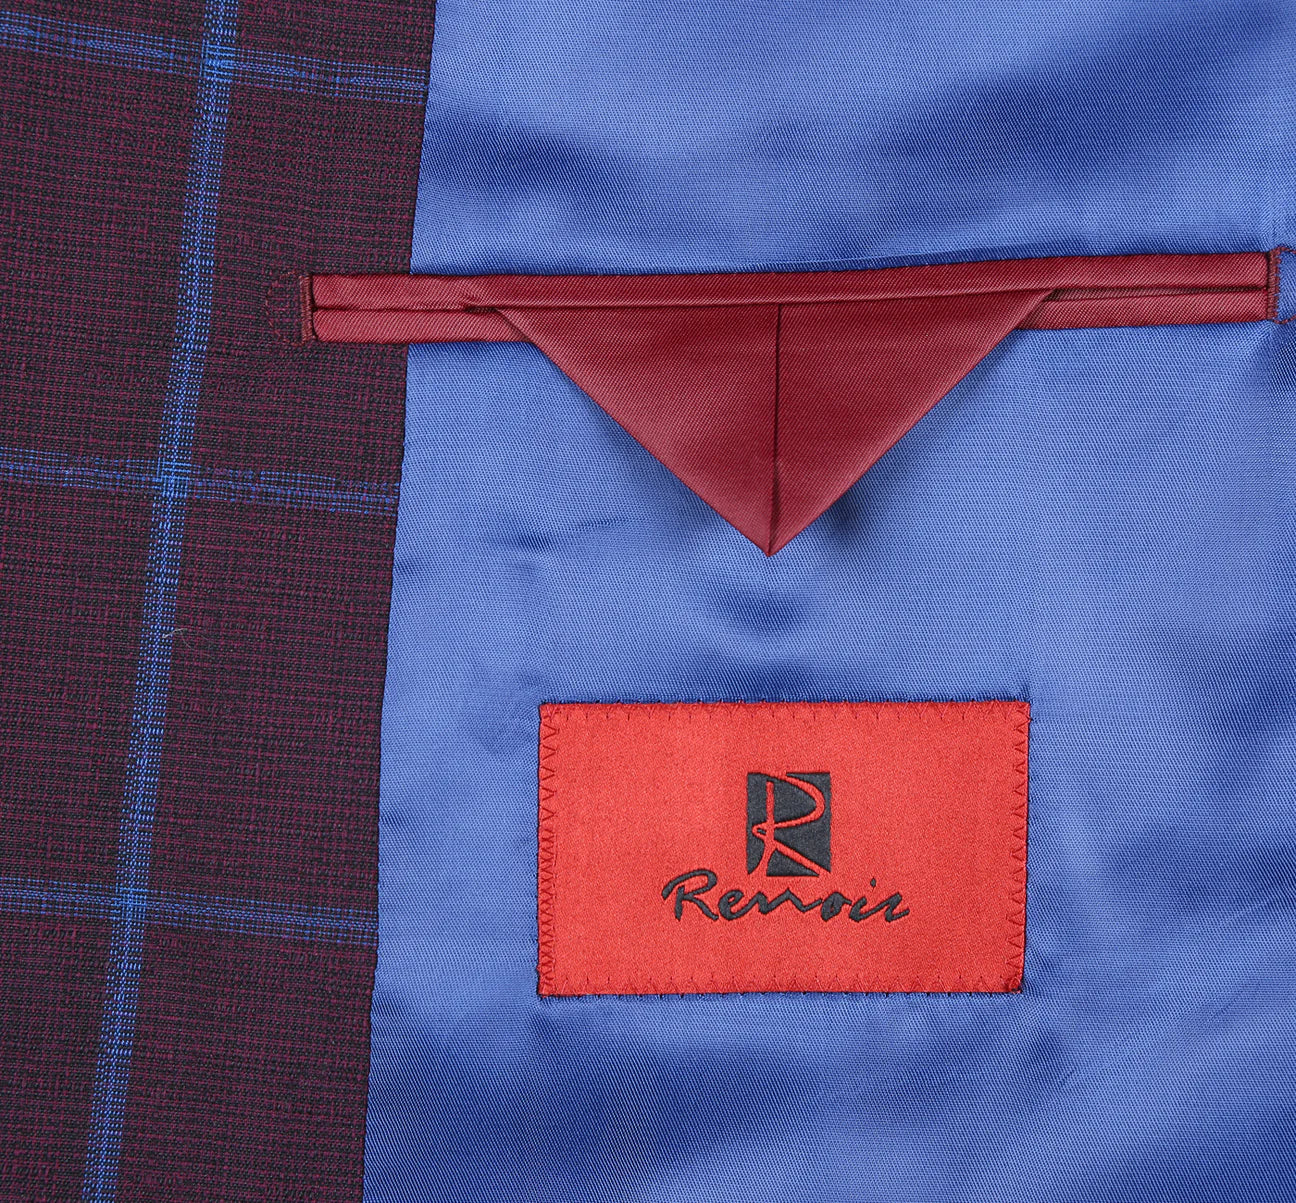 Renoir Slim Fit Burgundy with Blue Windowpane Sport Coat